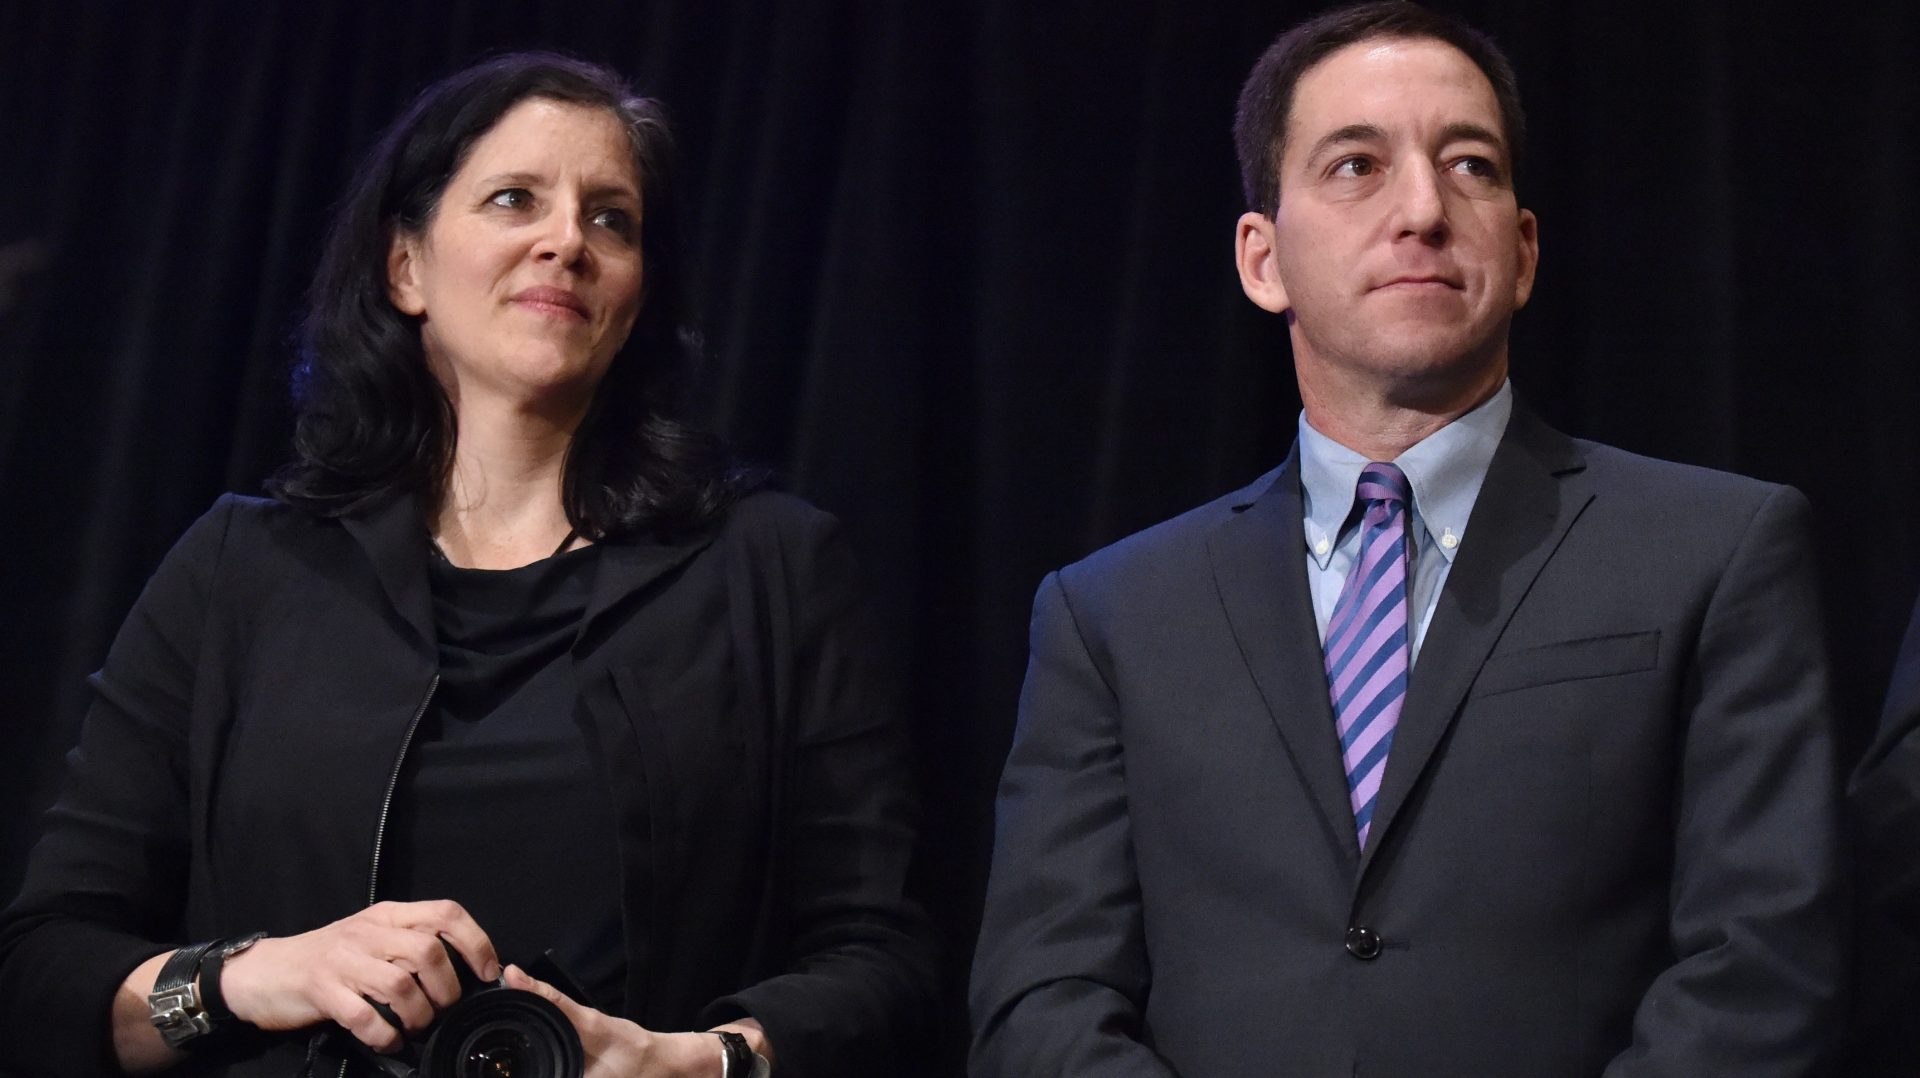 Glenn Greenwald and Laura Poitras